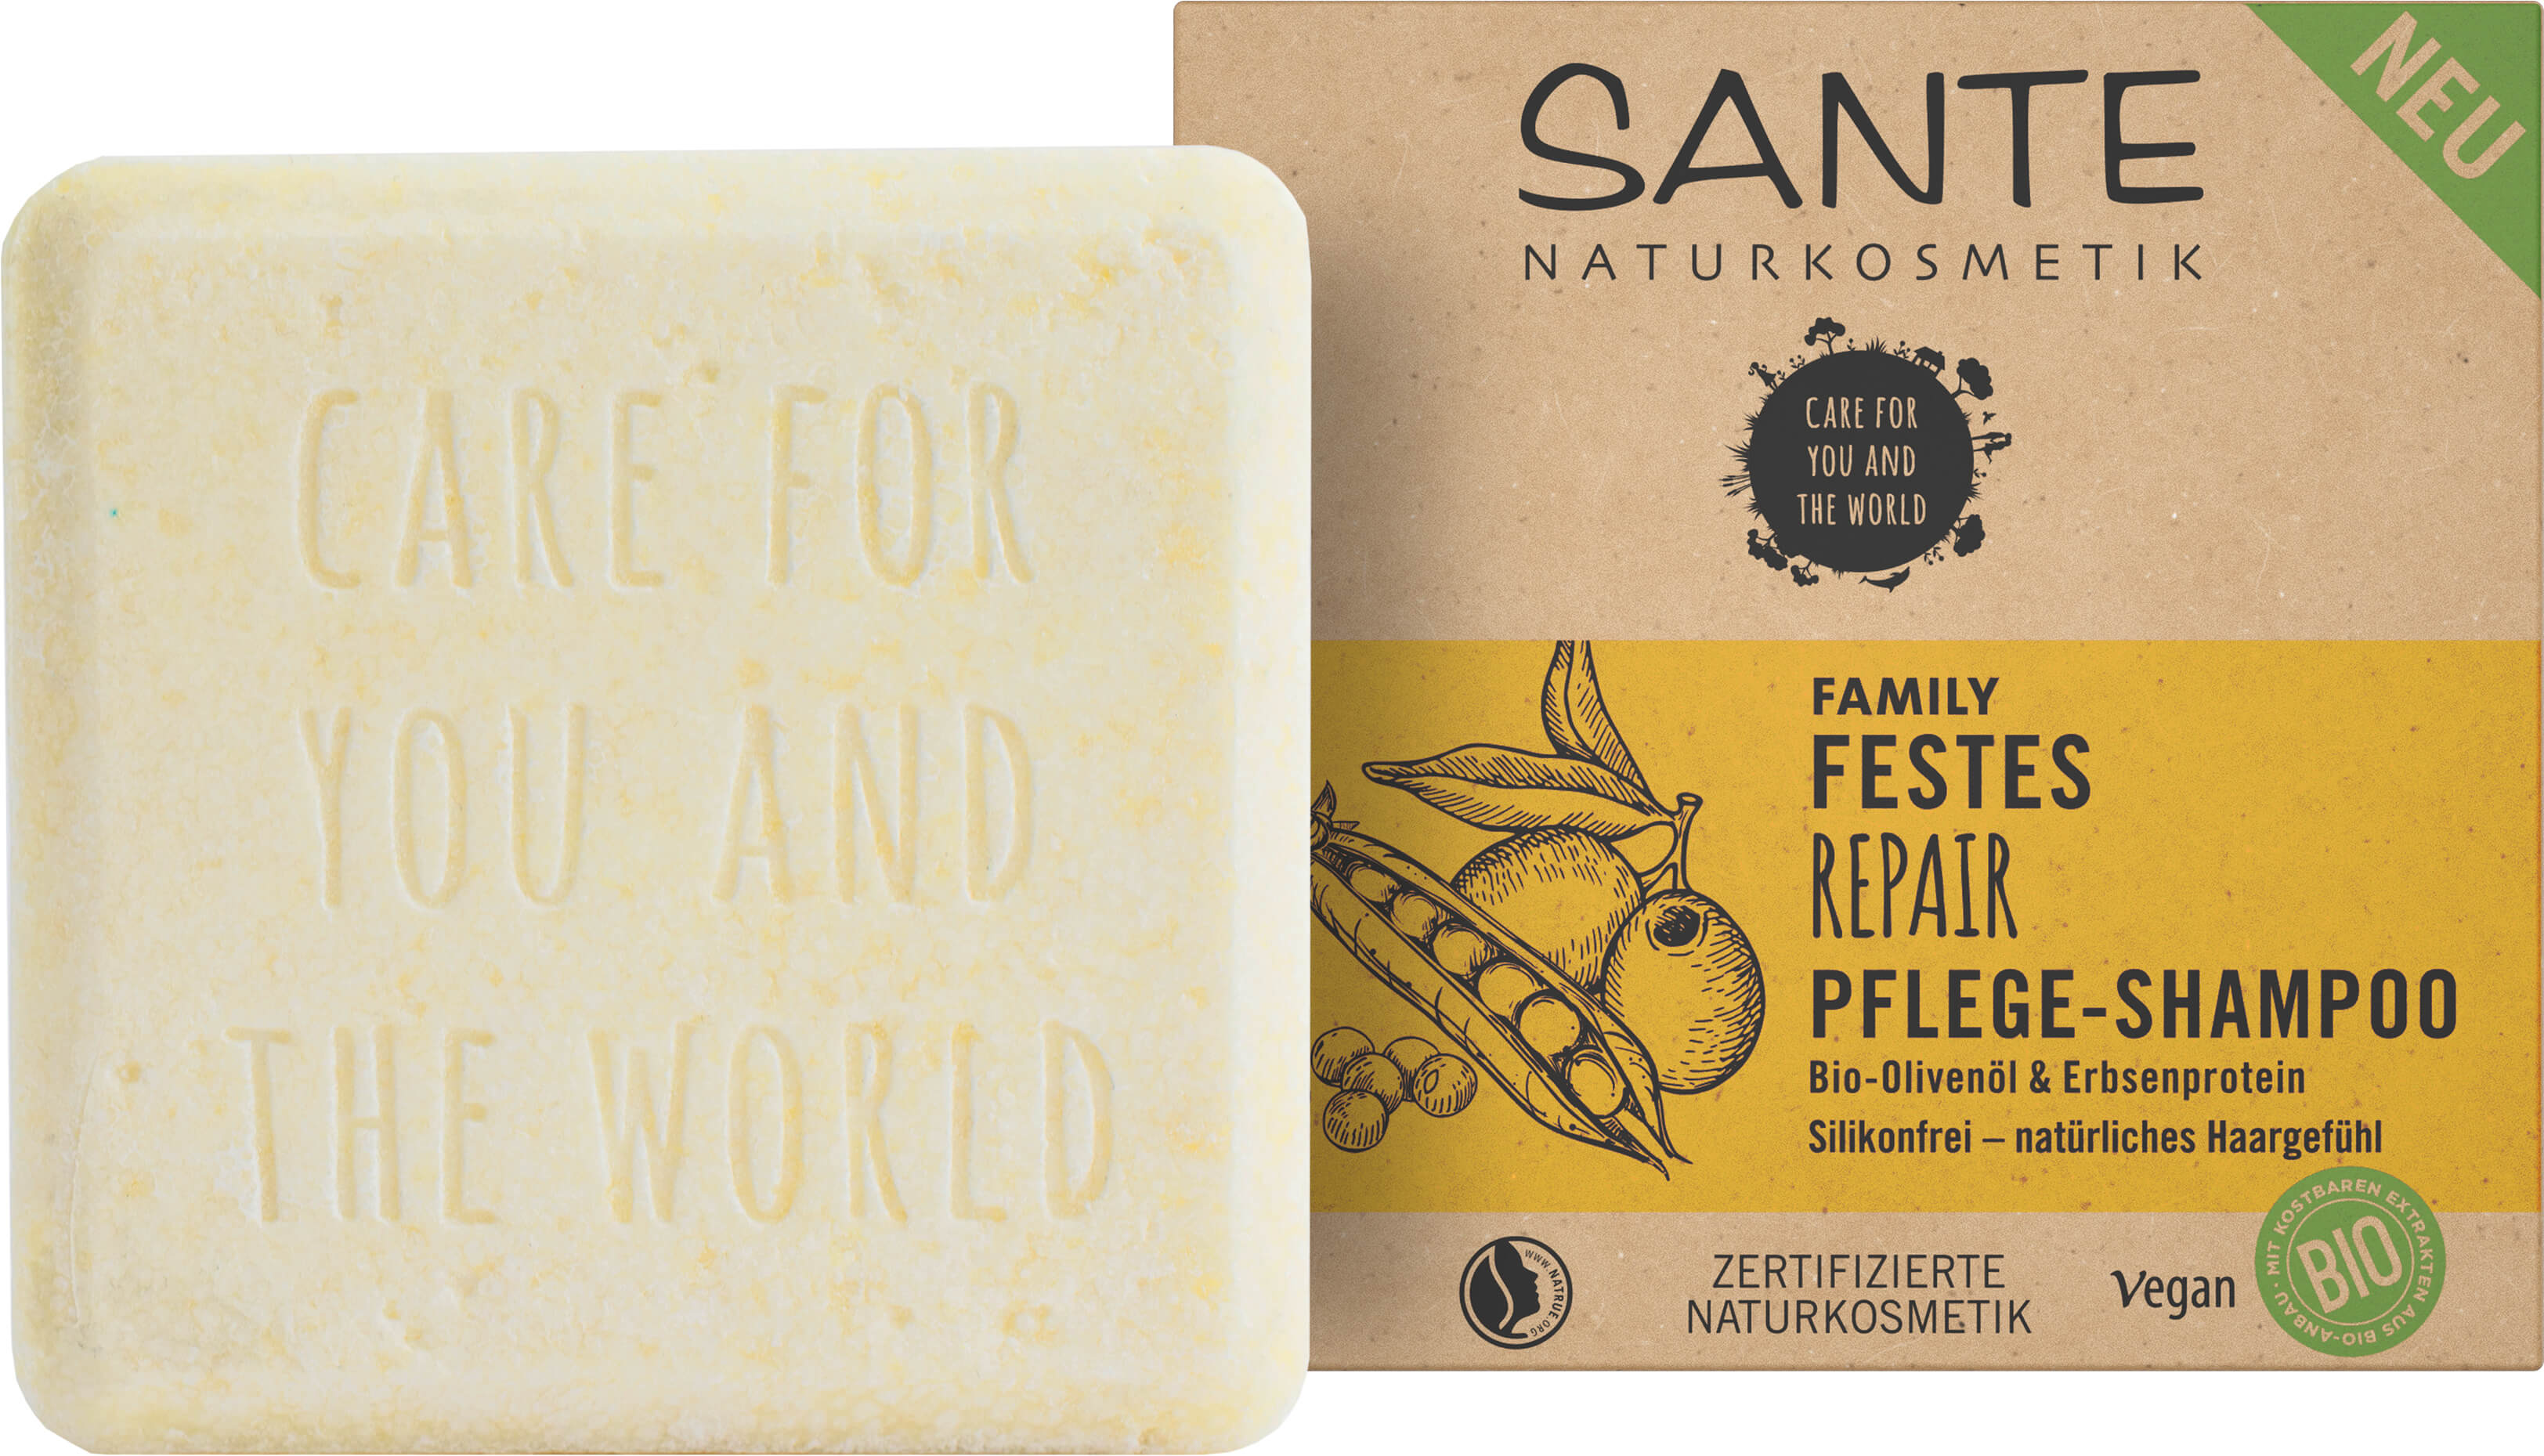 Festes Repair Pflege-Shampoo Bio-Olivenöl & SANTE | Erbsenprotein Naturkosmetik